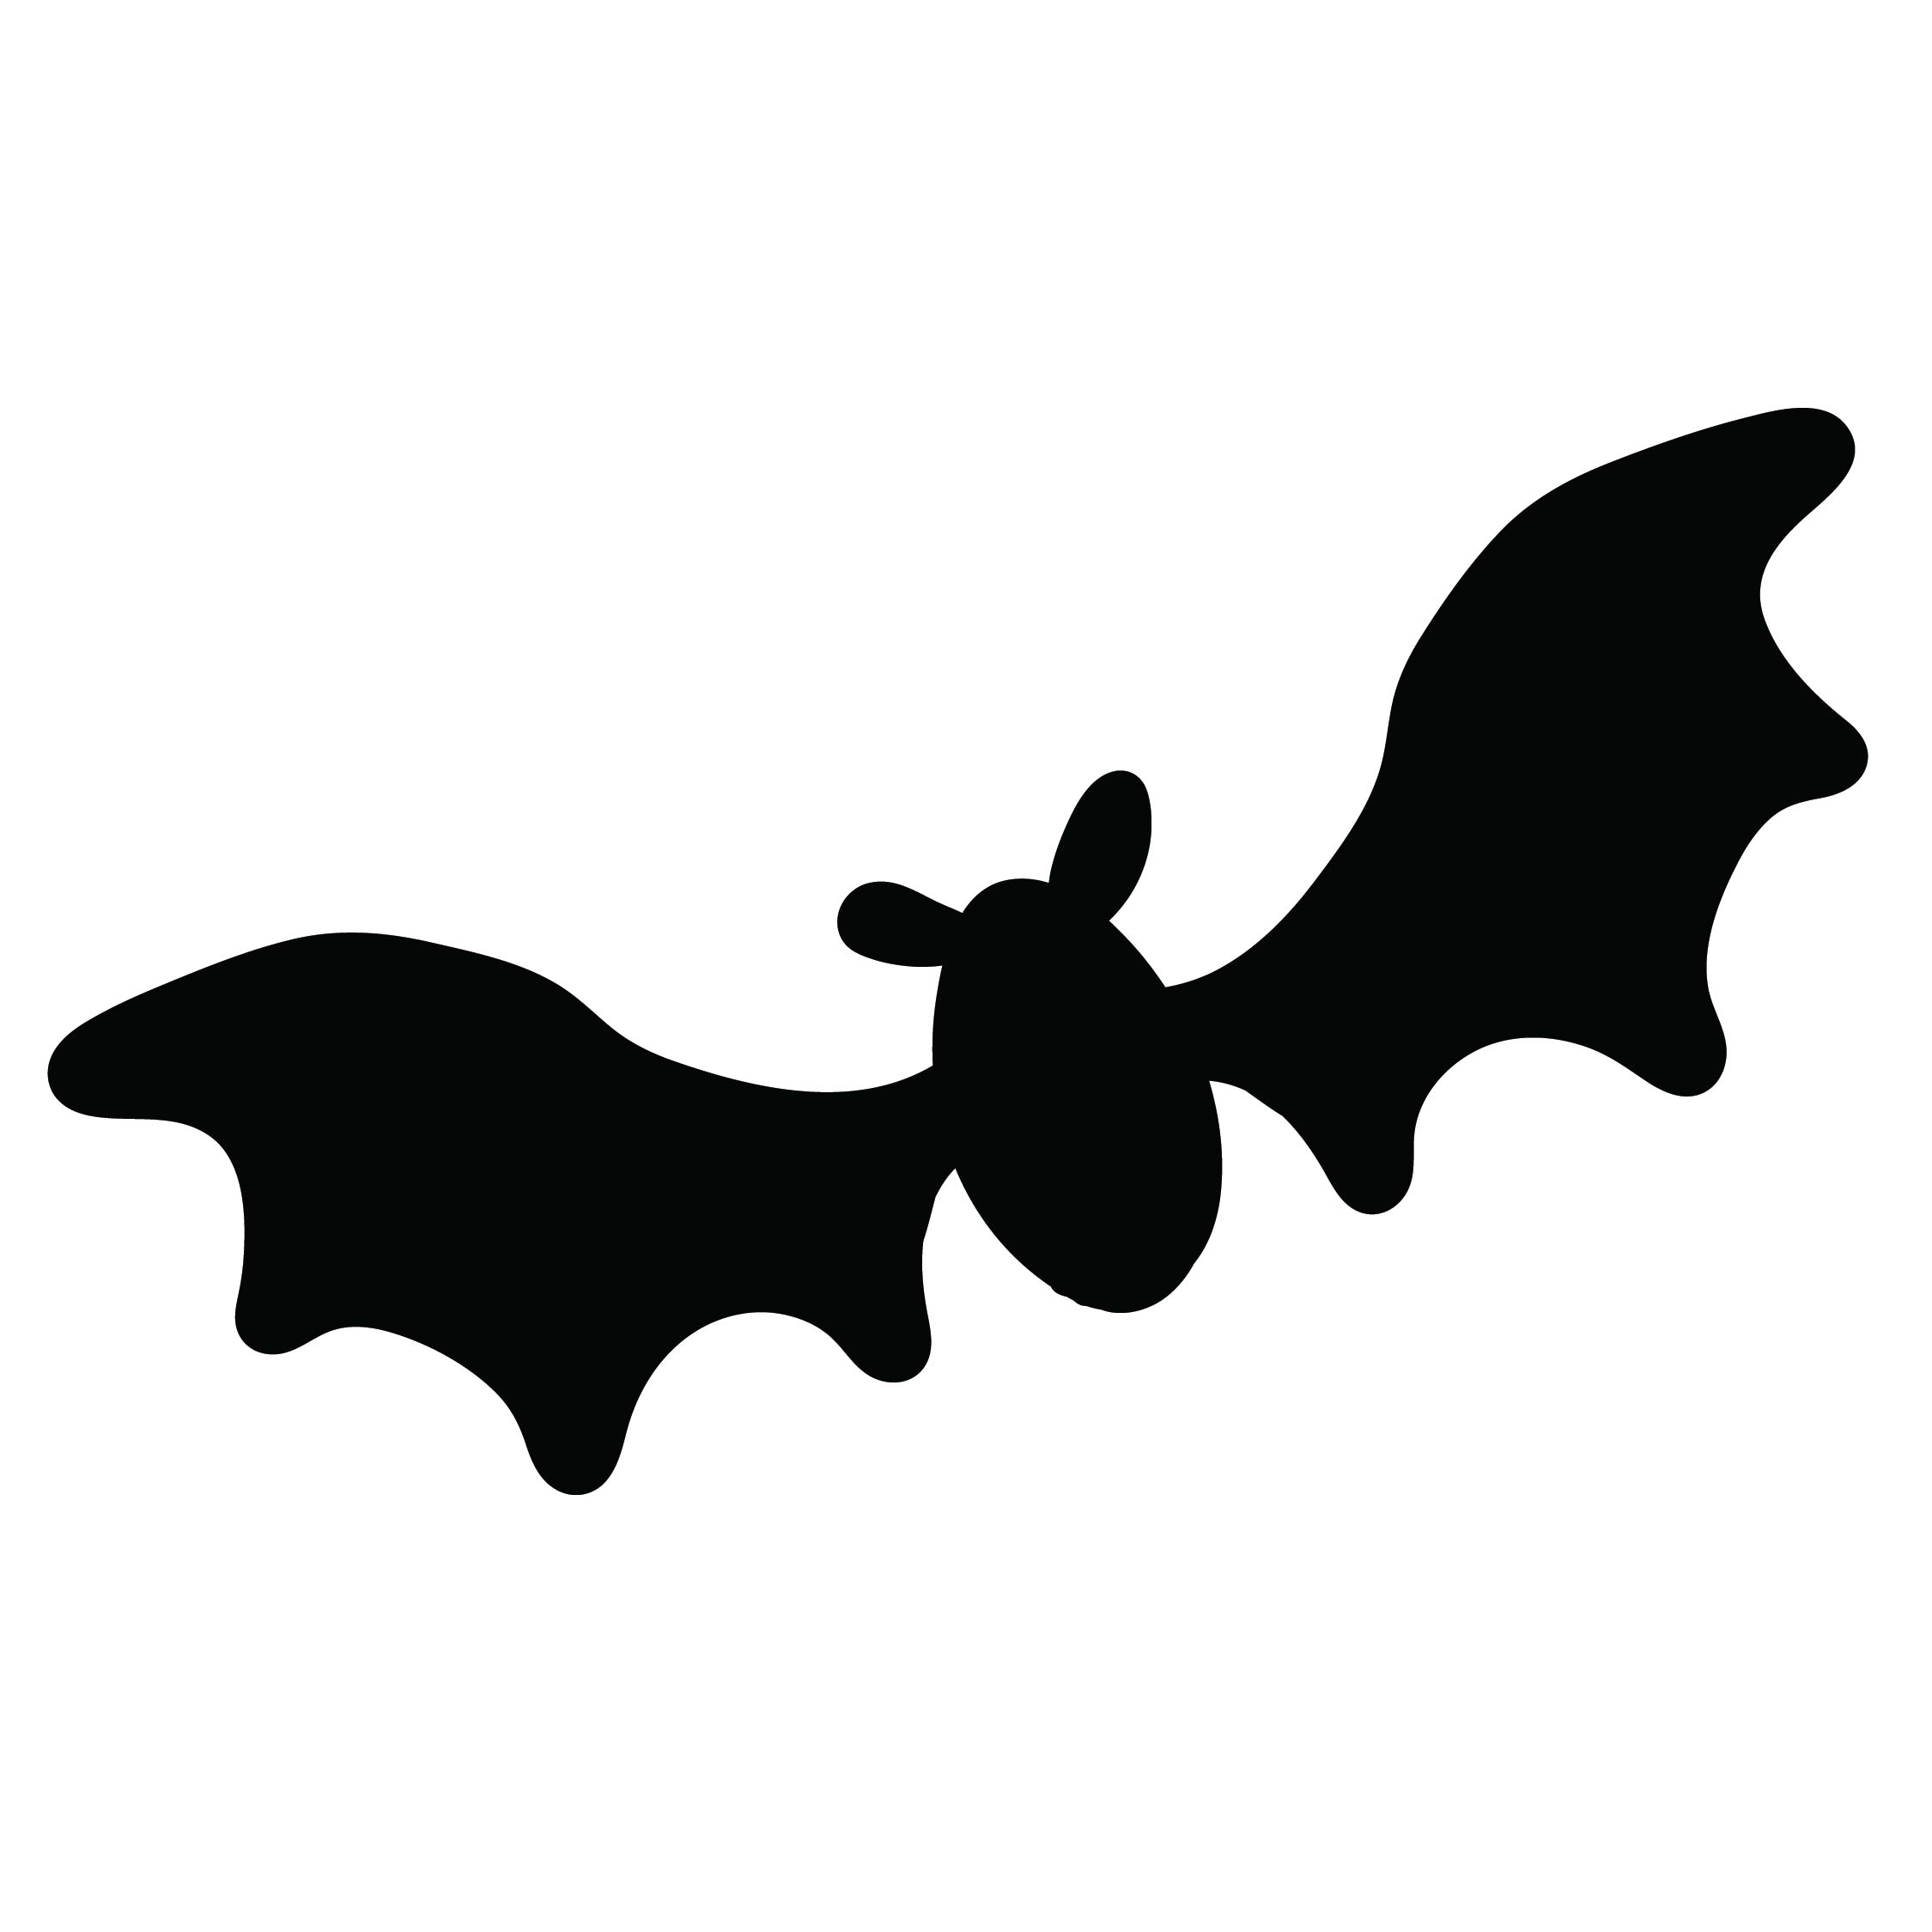 Printable Halloween Bat Template